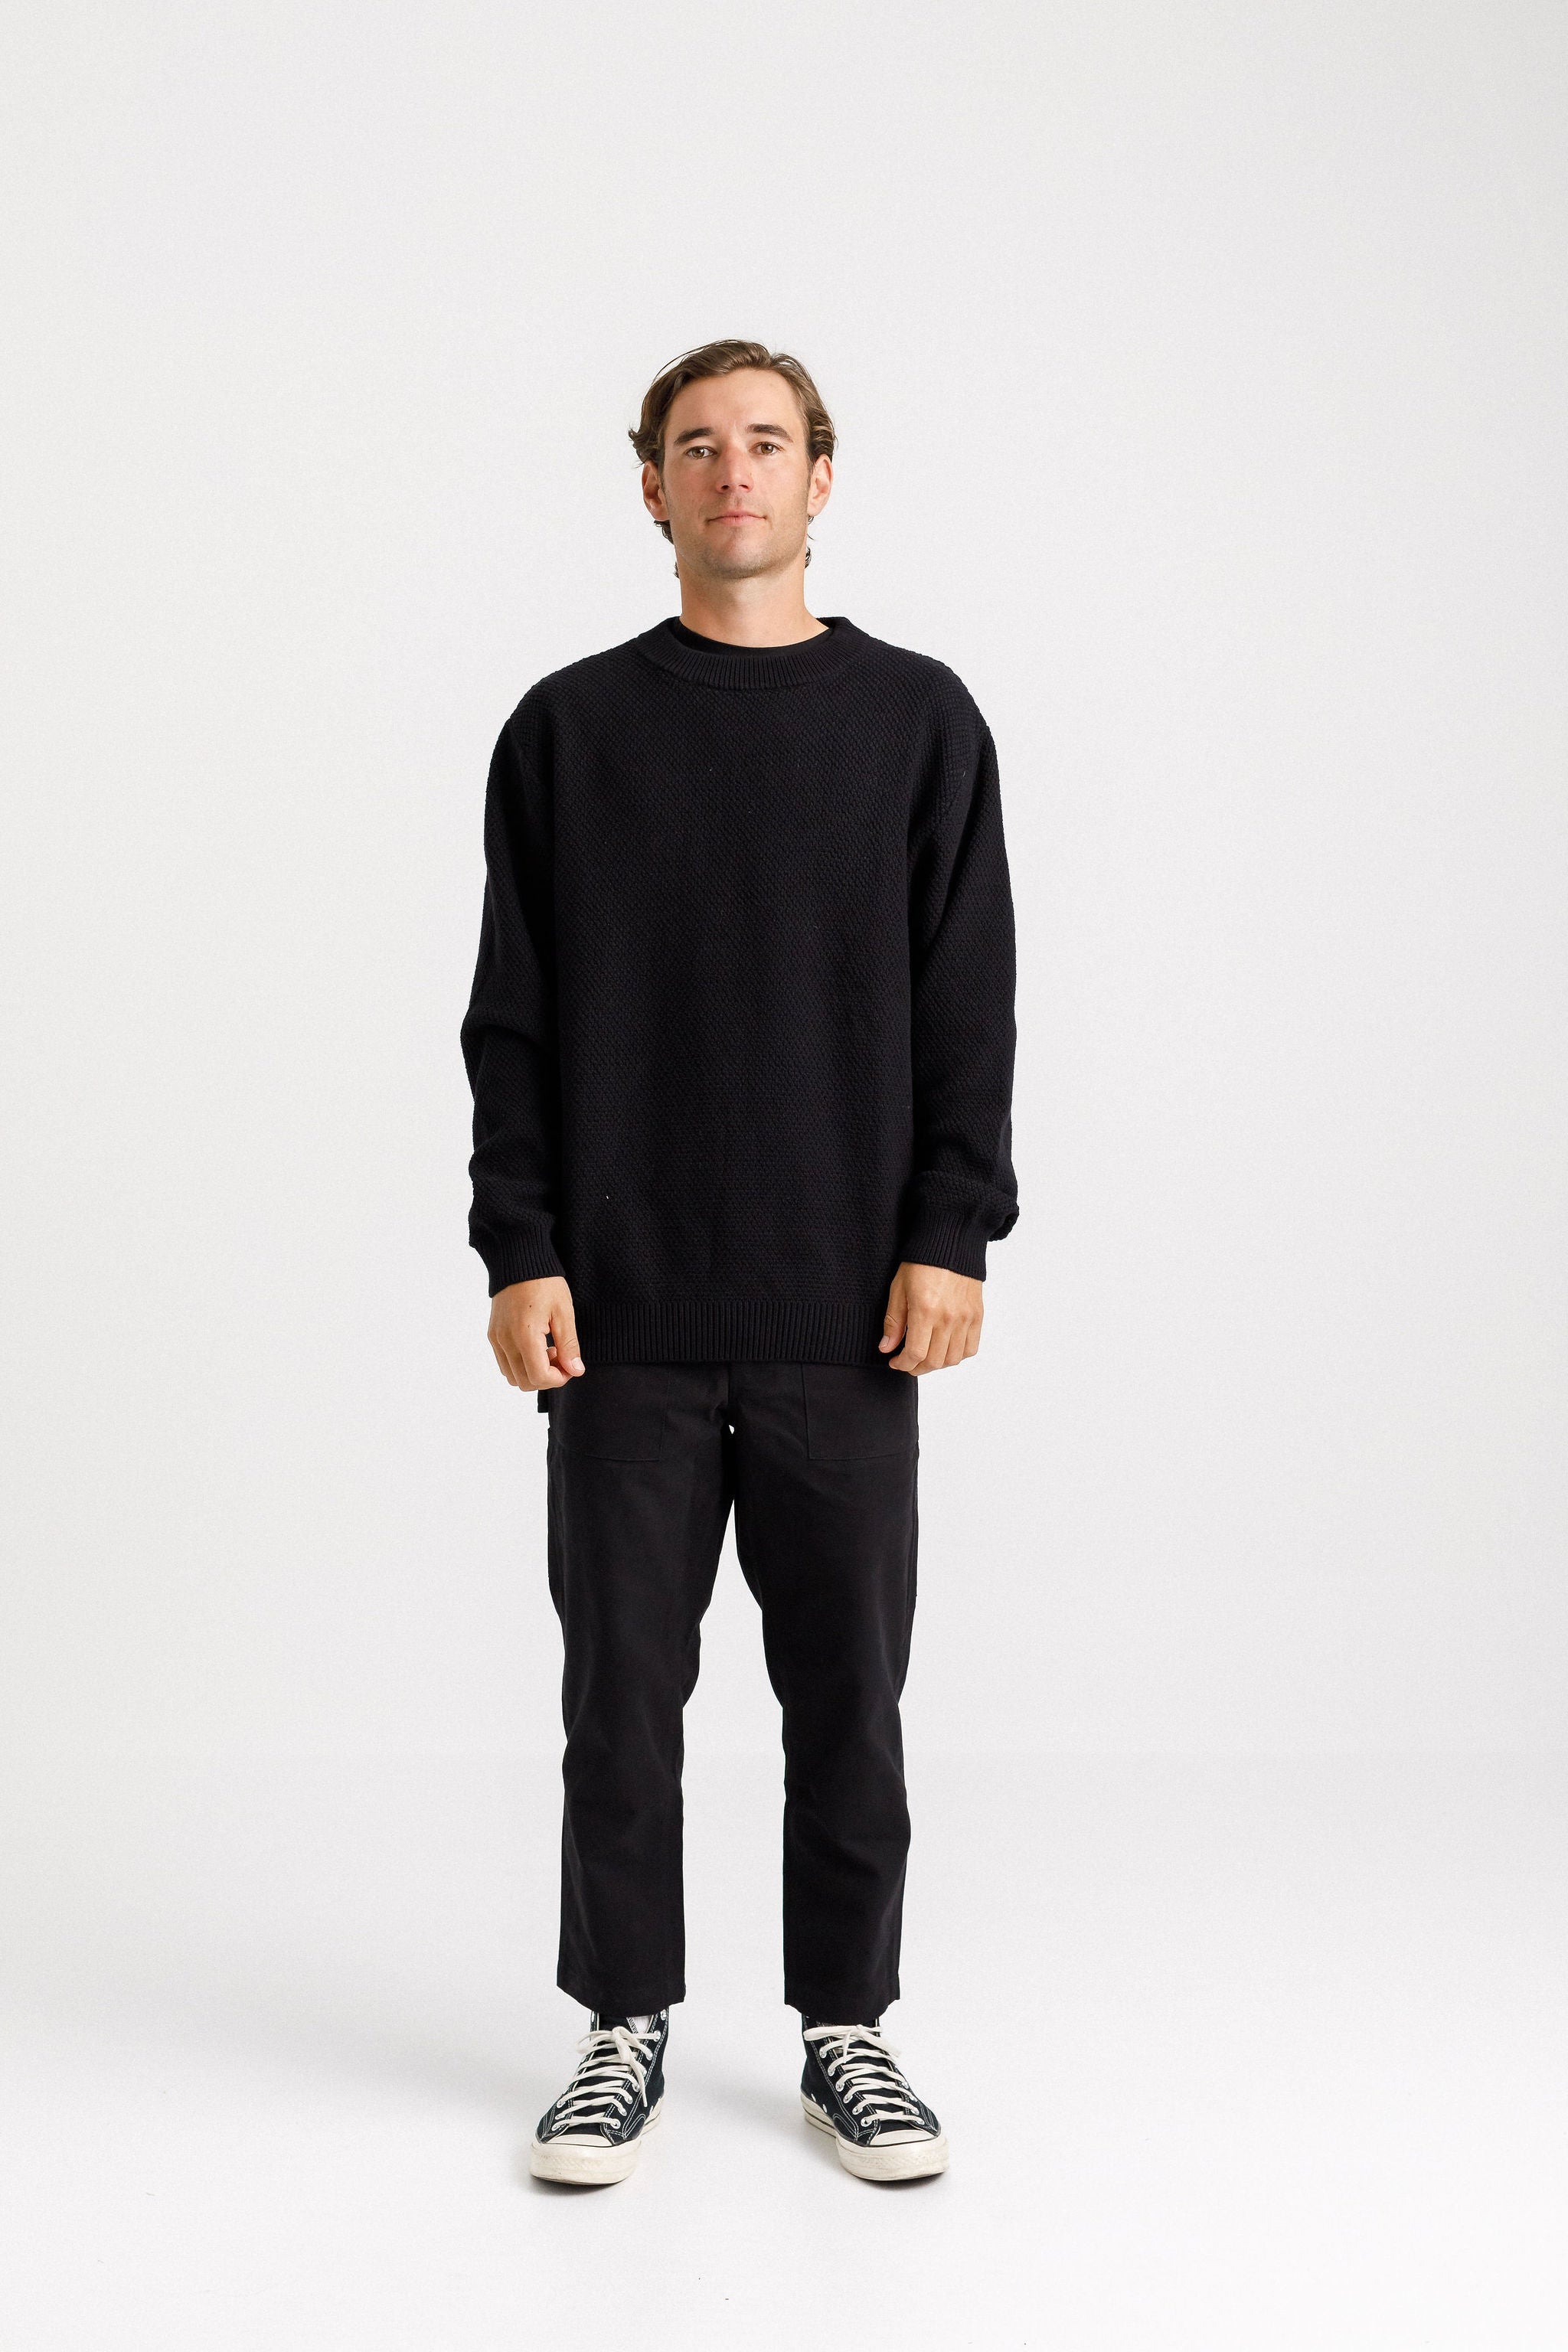 Attic Sweater - Sale - Black